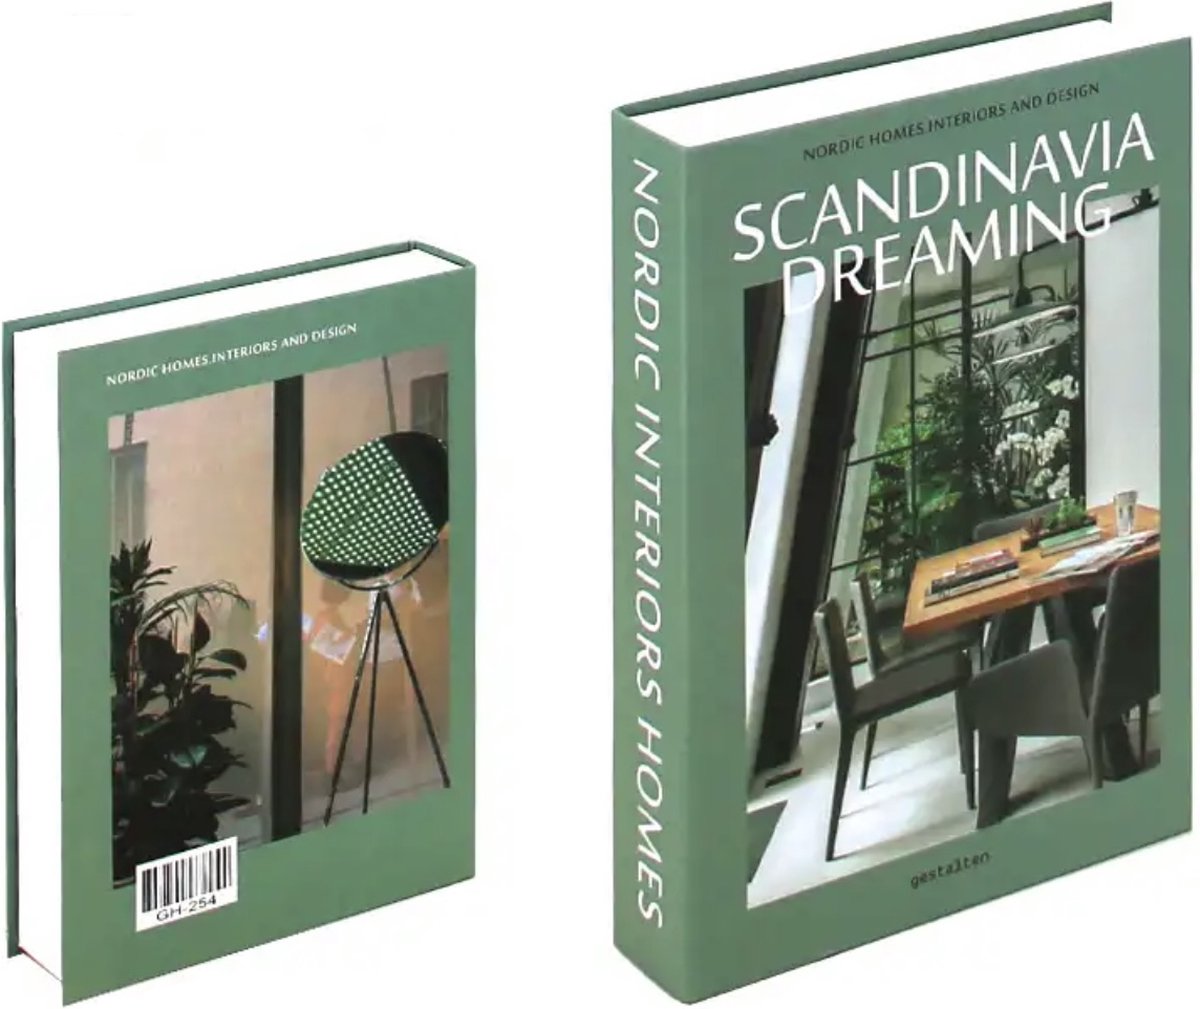 Opberg boek - Scandinavia dreaming - Groen - Opbergbox - Opbergdoos - Decoratie woonkamer - Boeken - Nep boek - Opbergboek